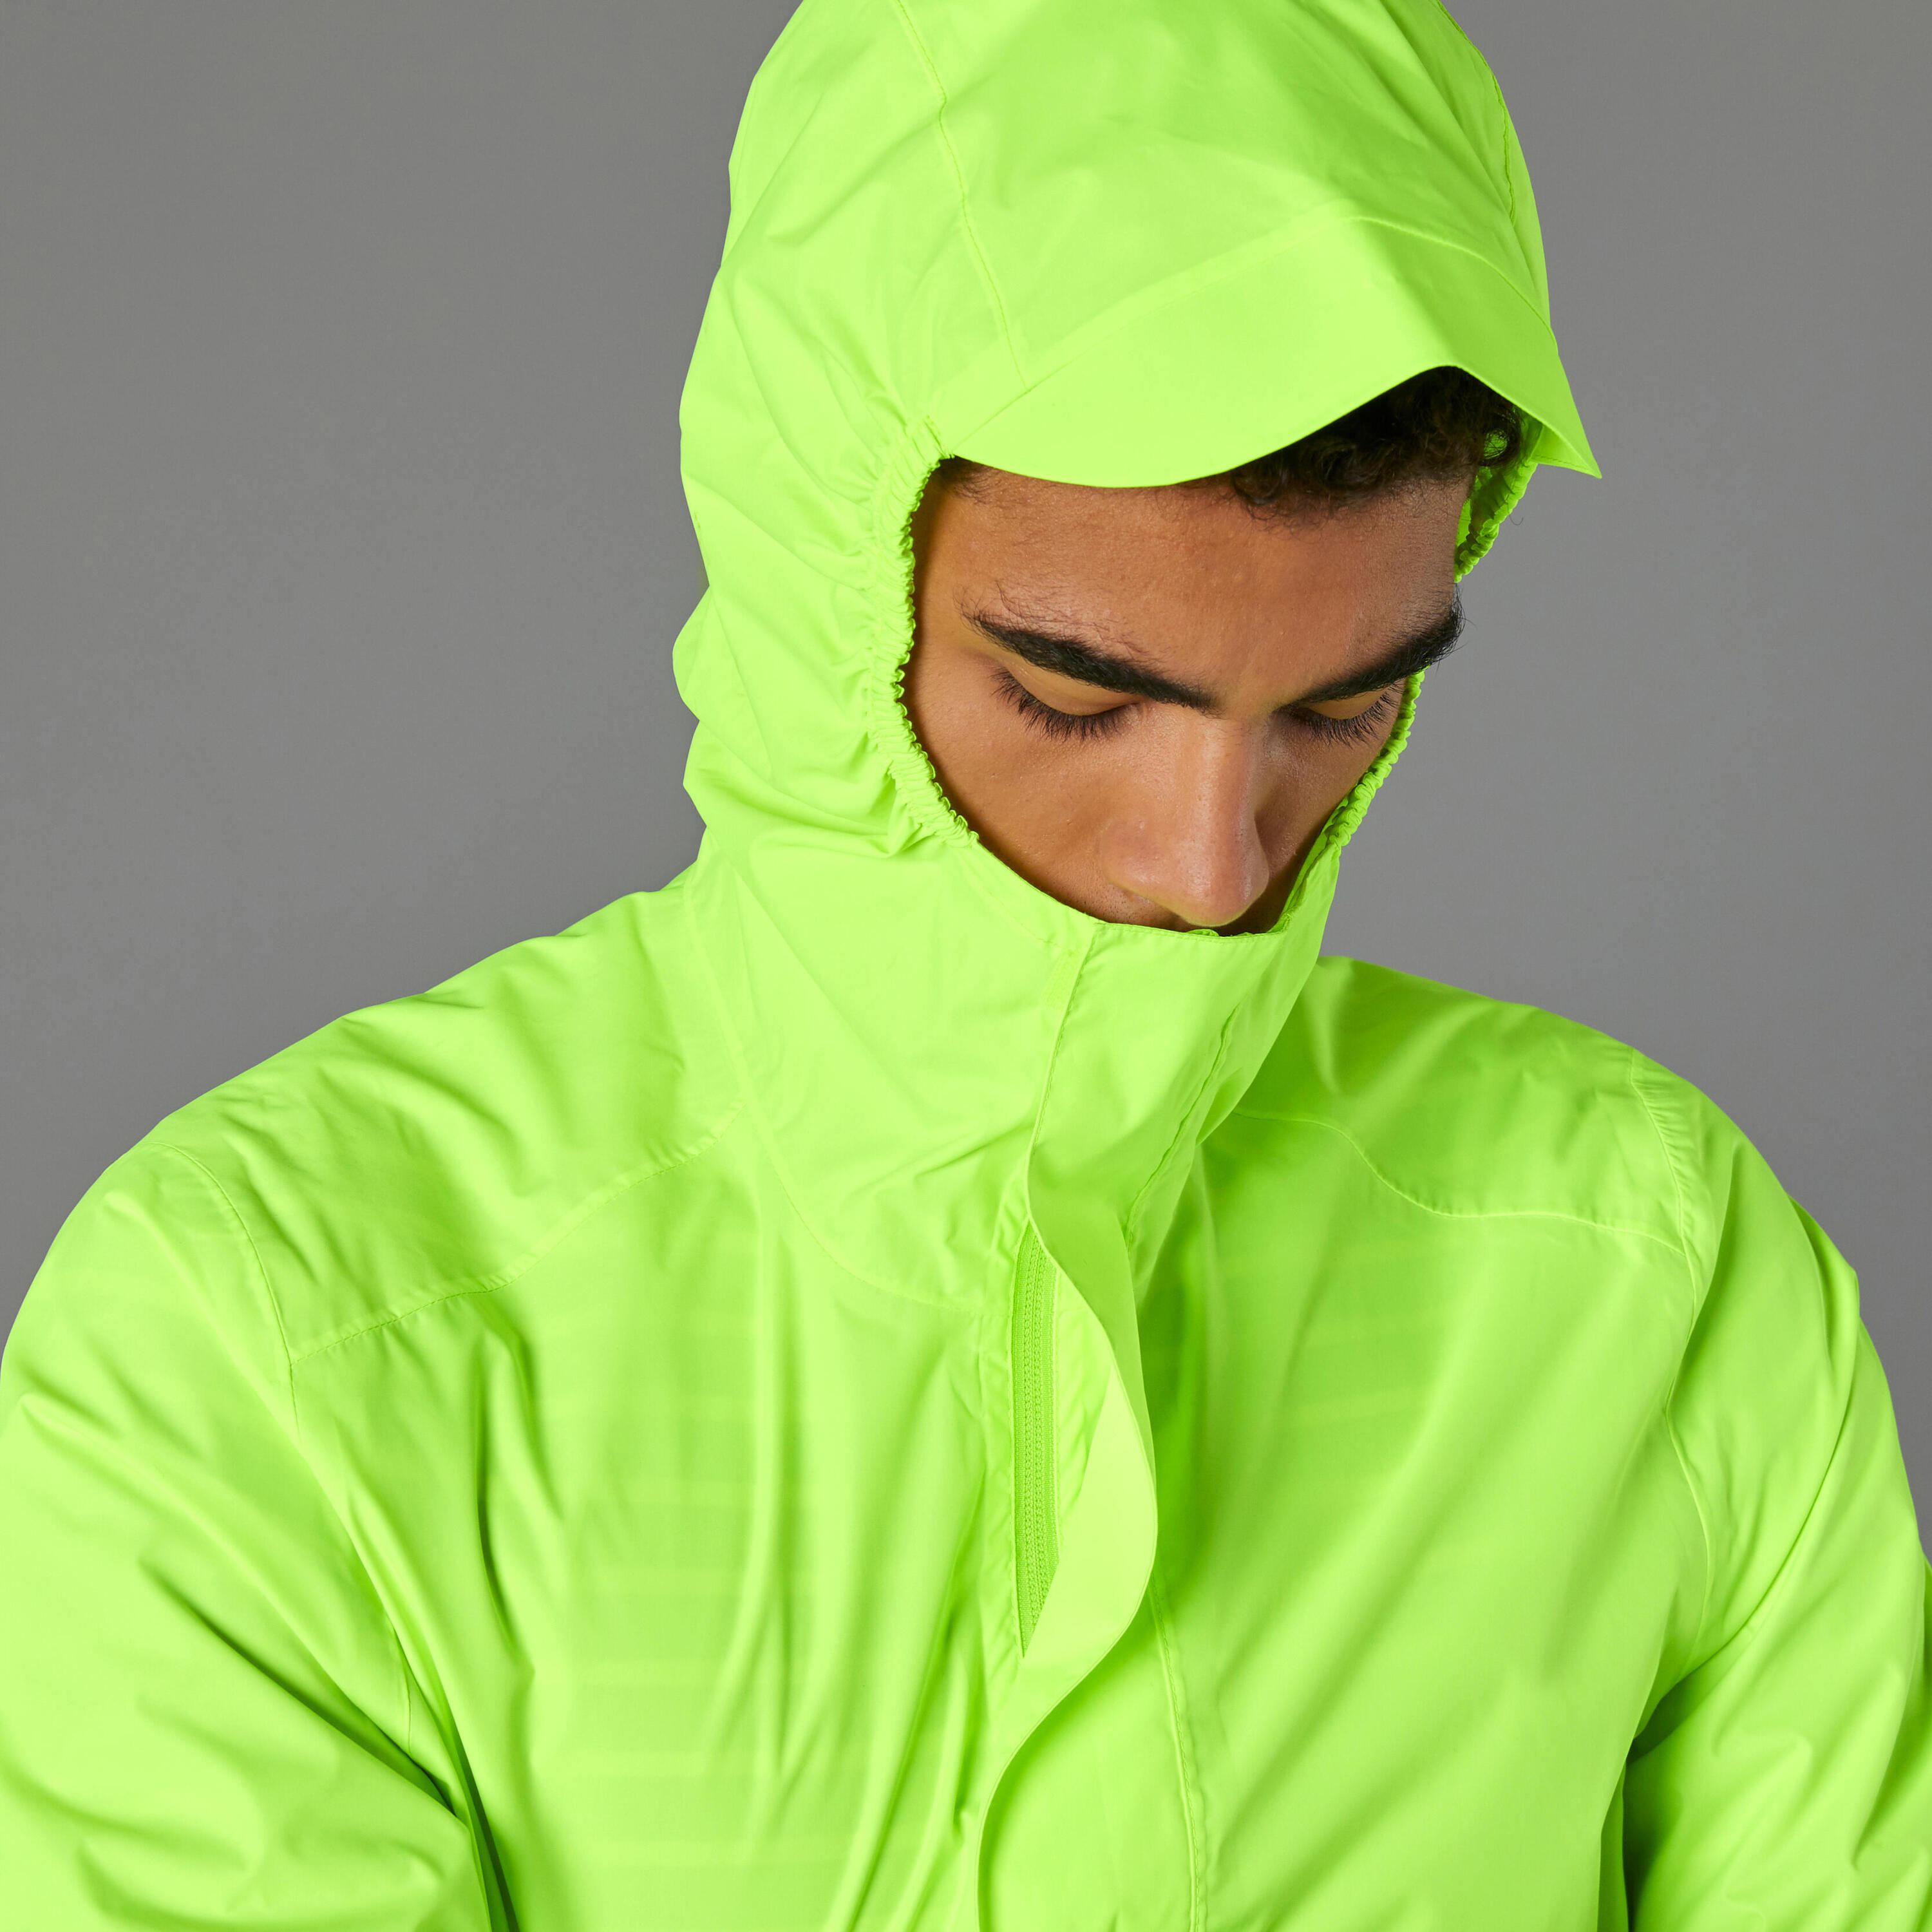 100 Men's Waterproof Urban Cycling Jacket - Neon Yellow 20/29